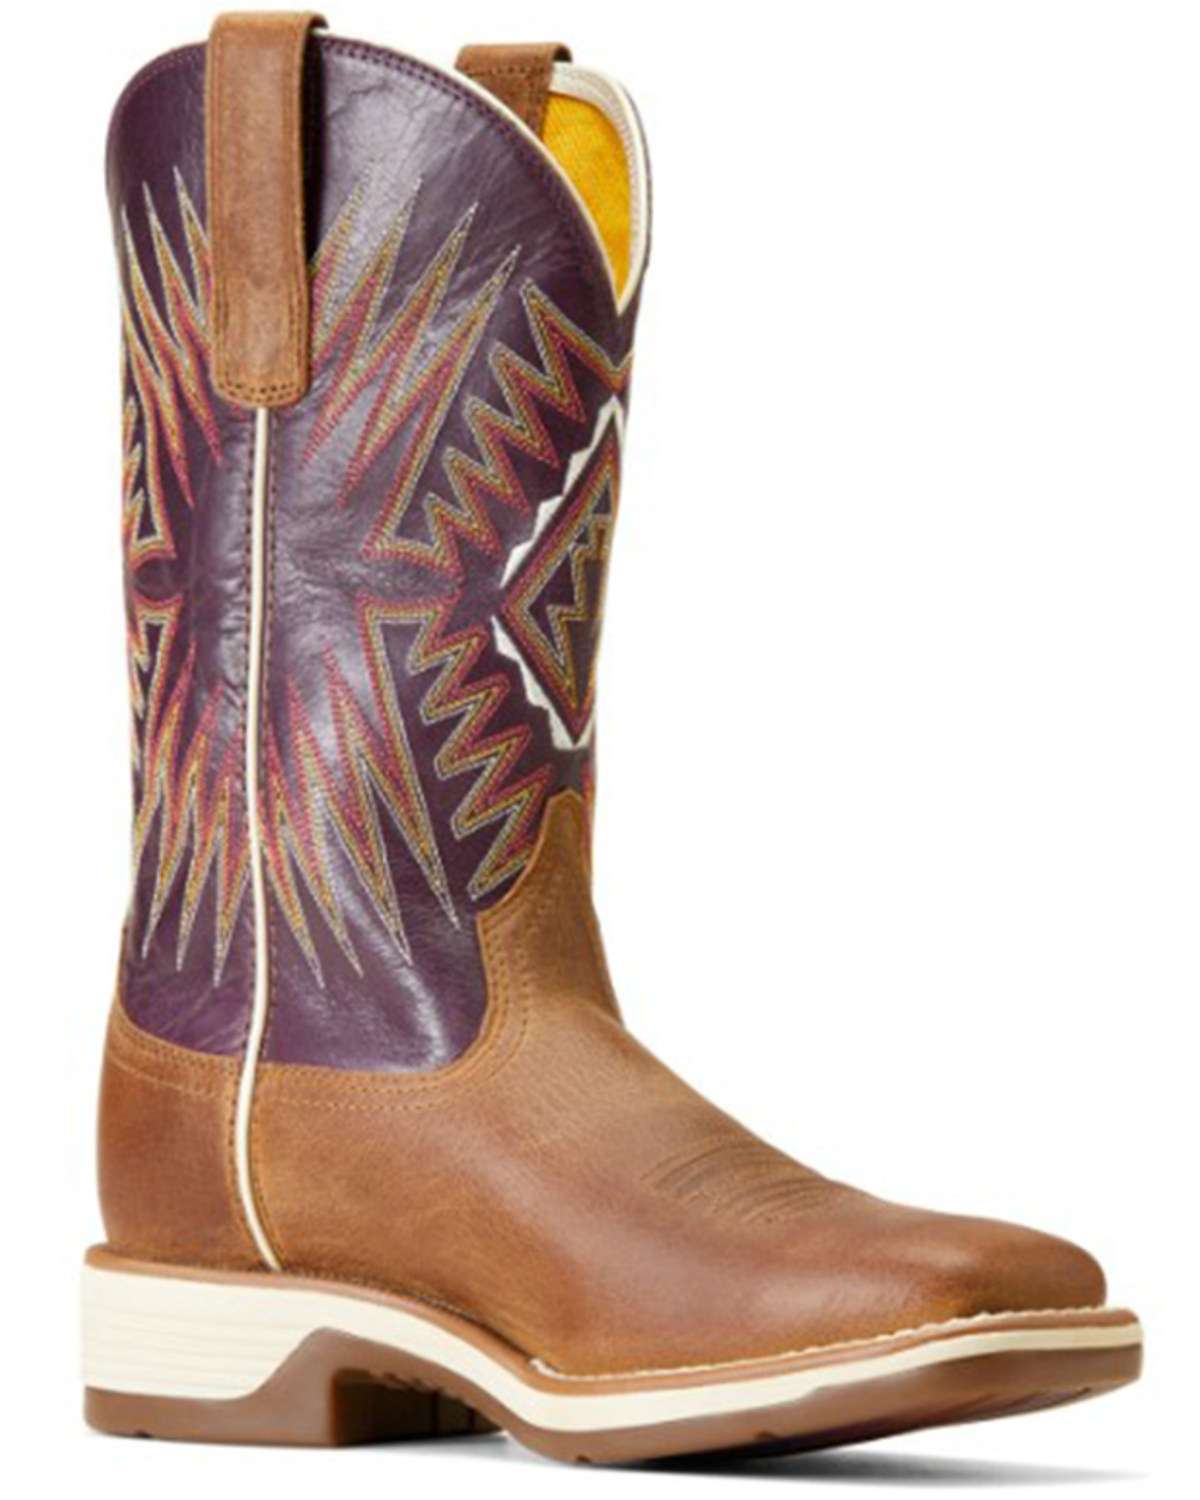 Ariat Women's Ridgeback Western Performance Boots - Broad Square Toe